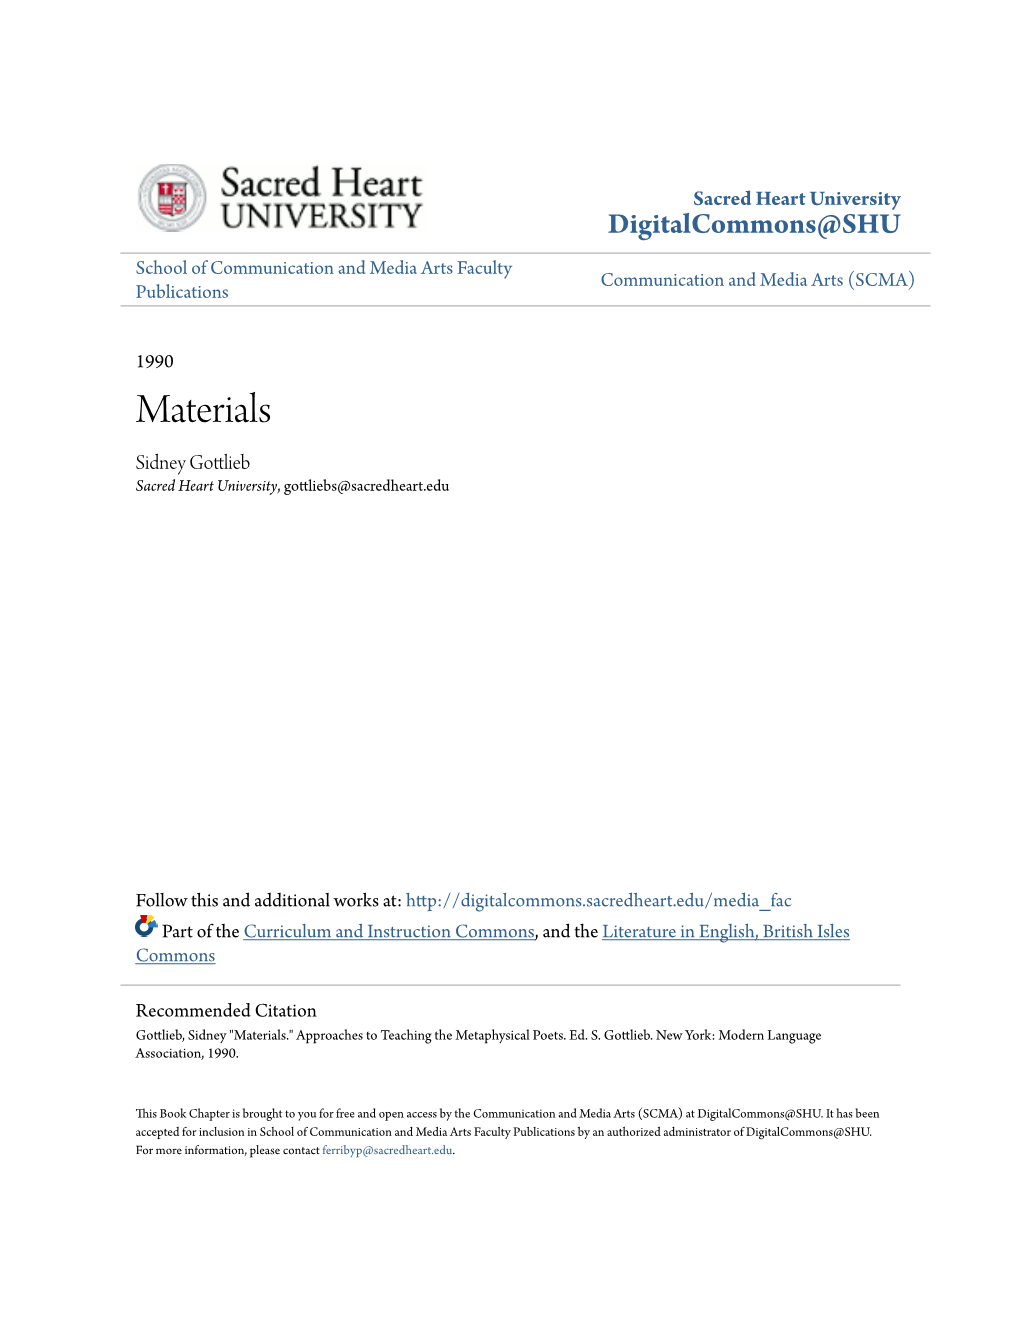 Materials Sidney Gottlieb Sacred Heart University, Gottliebs@Sacredheart.Edu